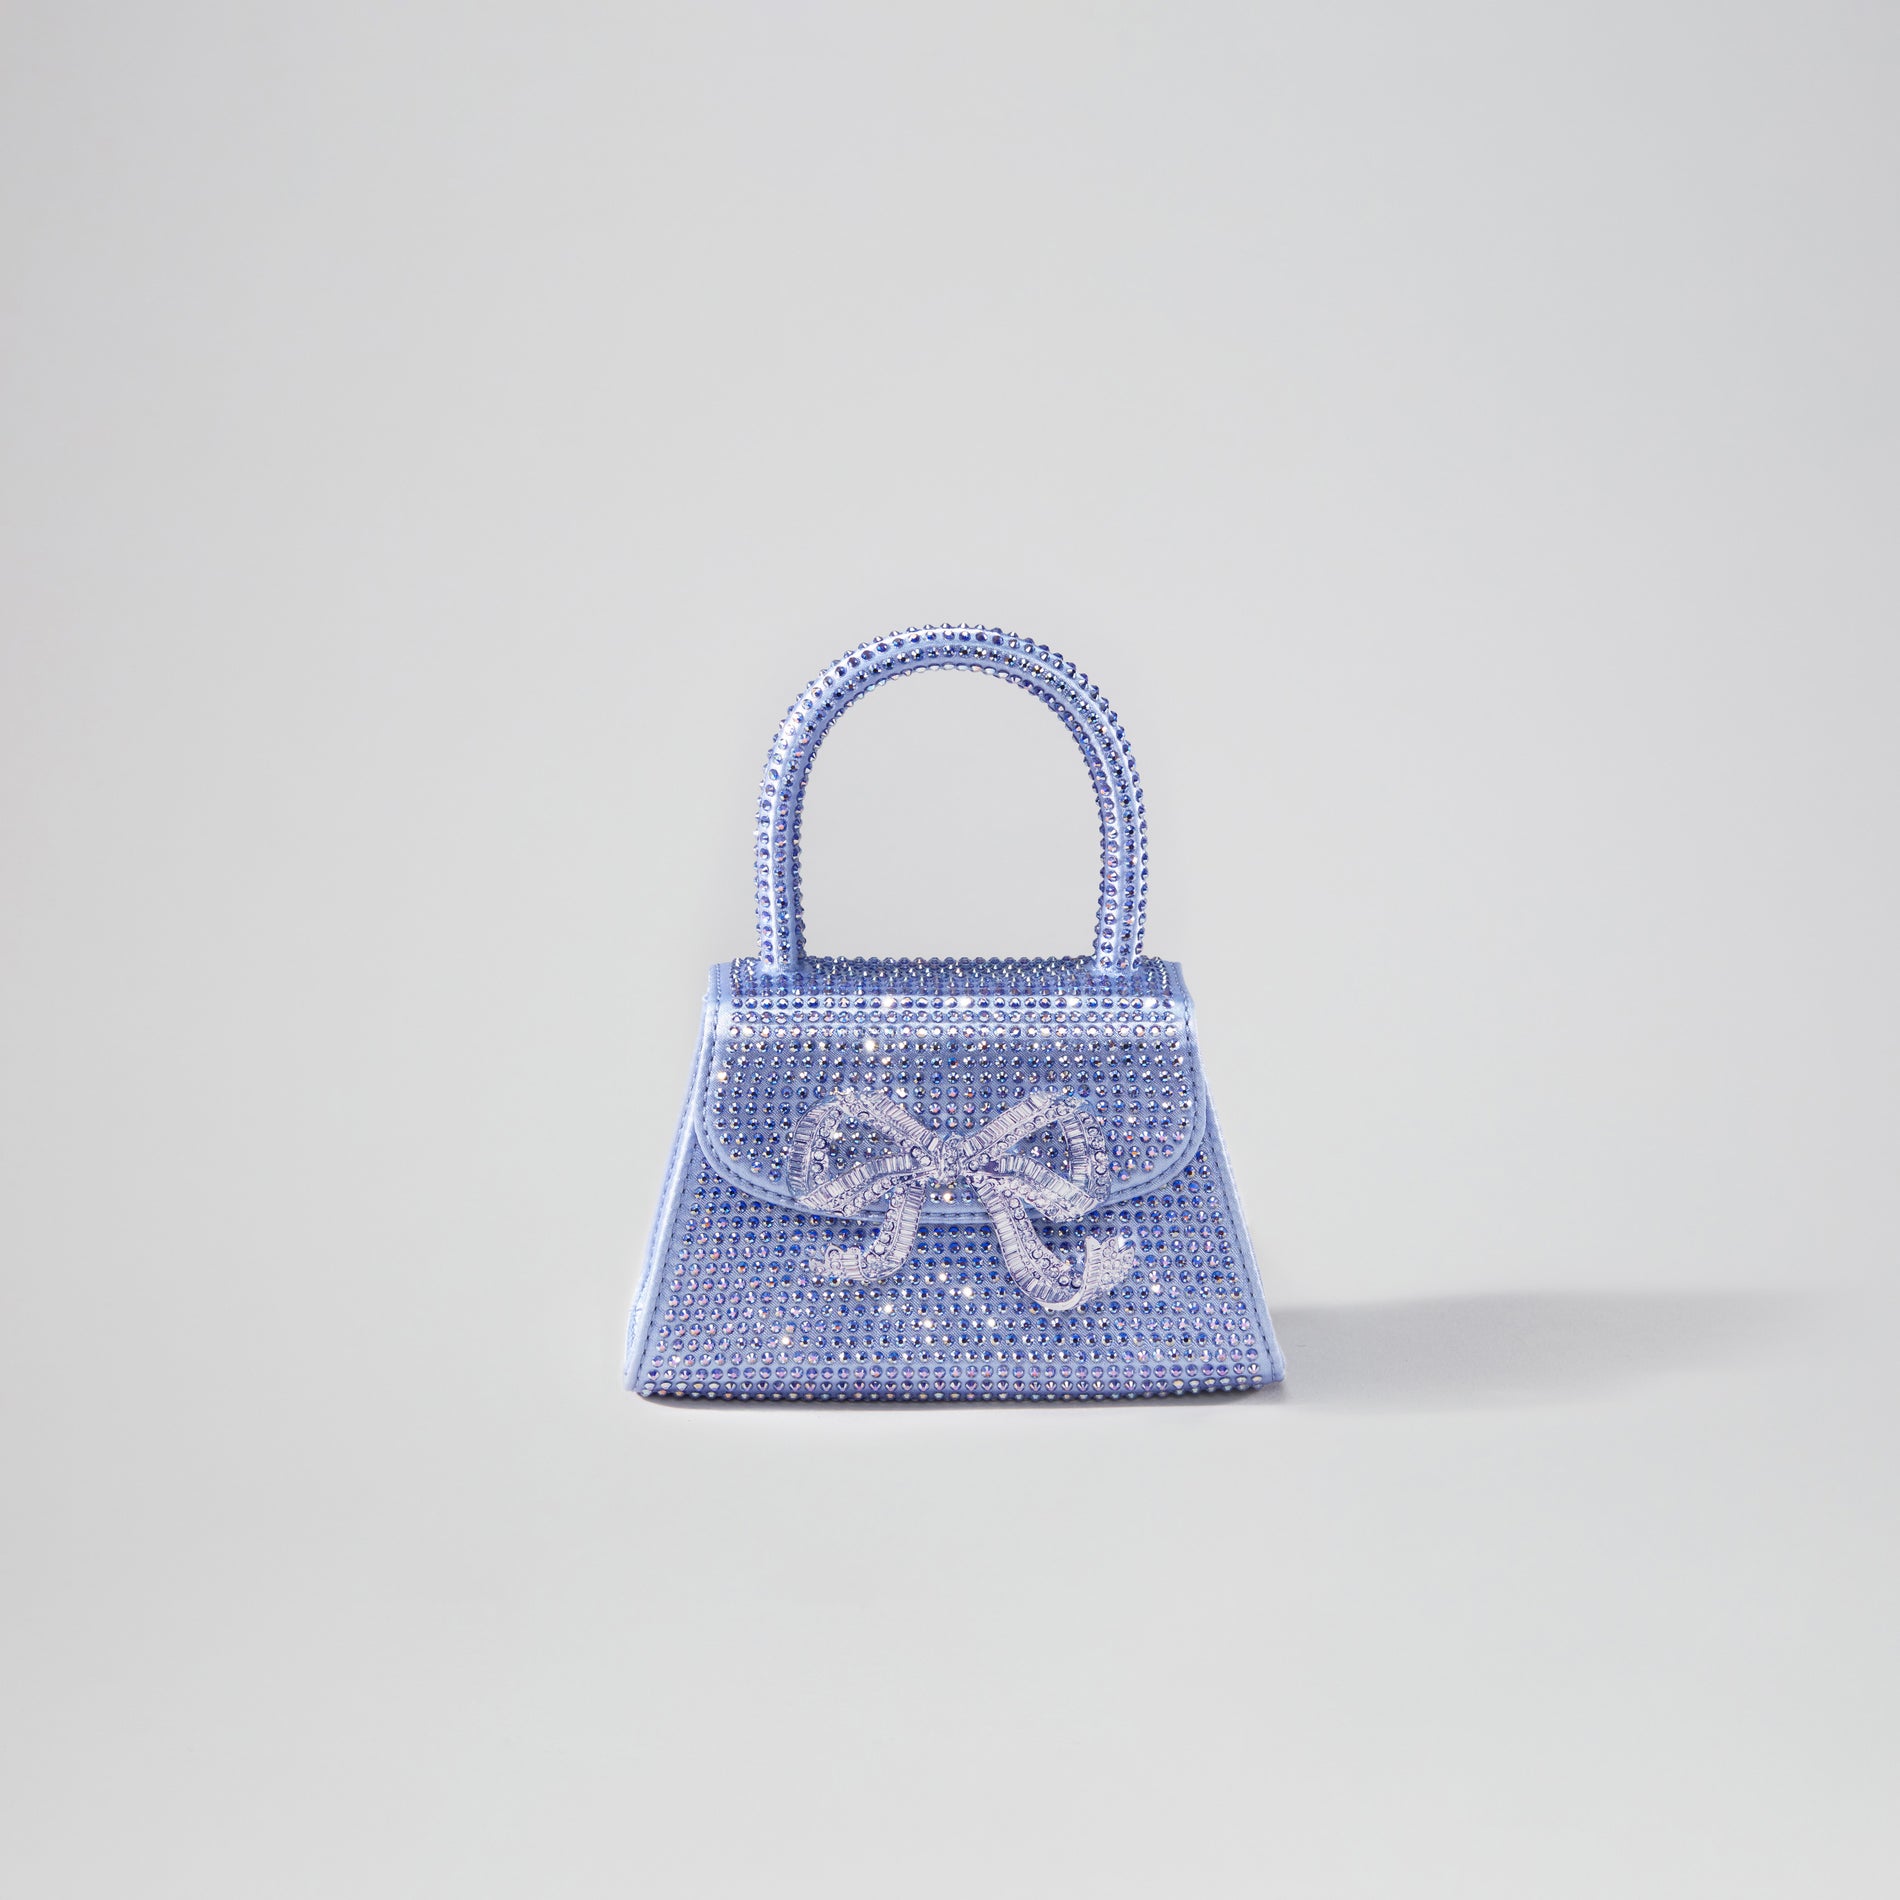 Blue Rhinestone Micro Bow Bag